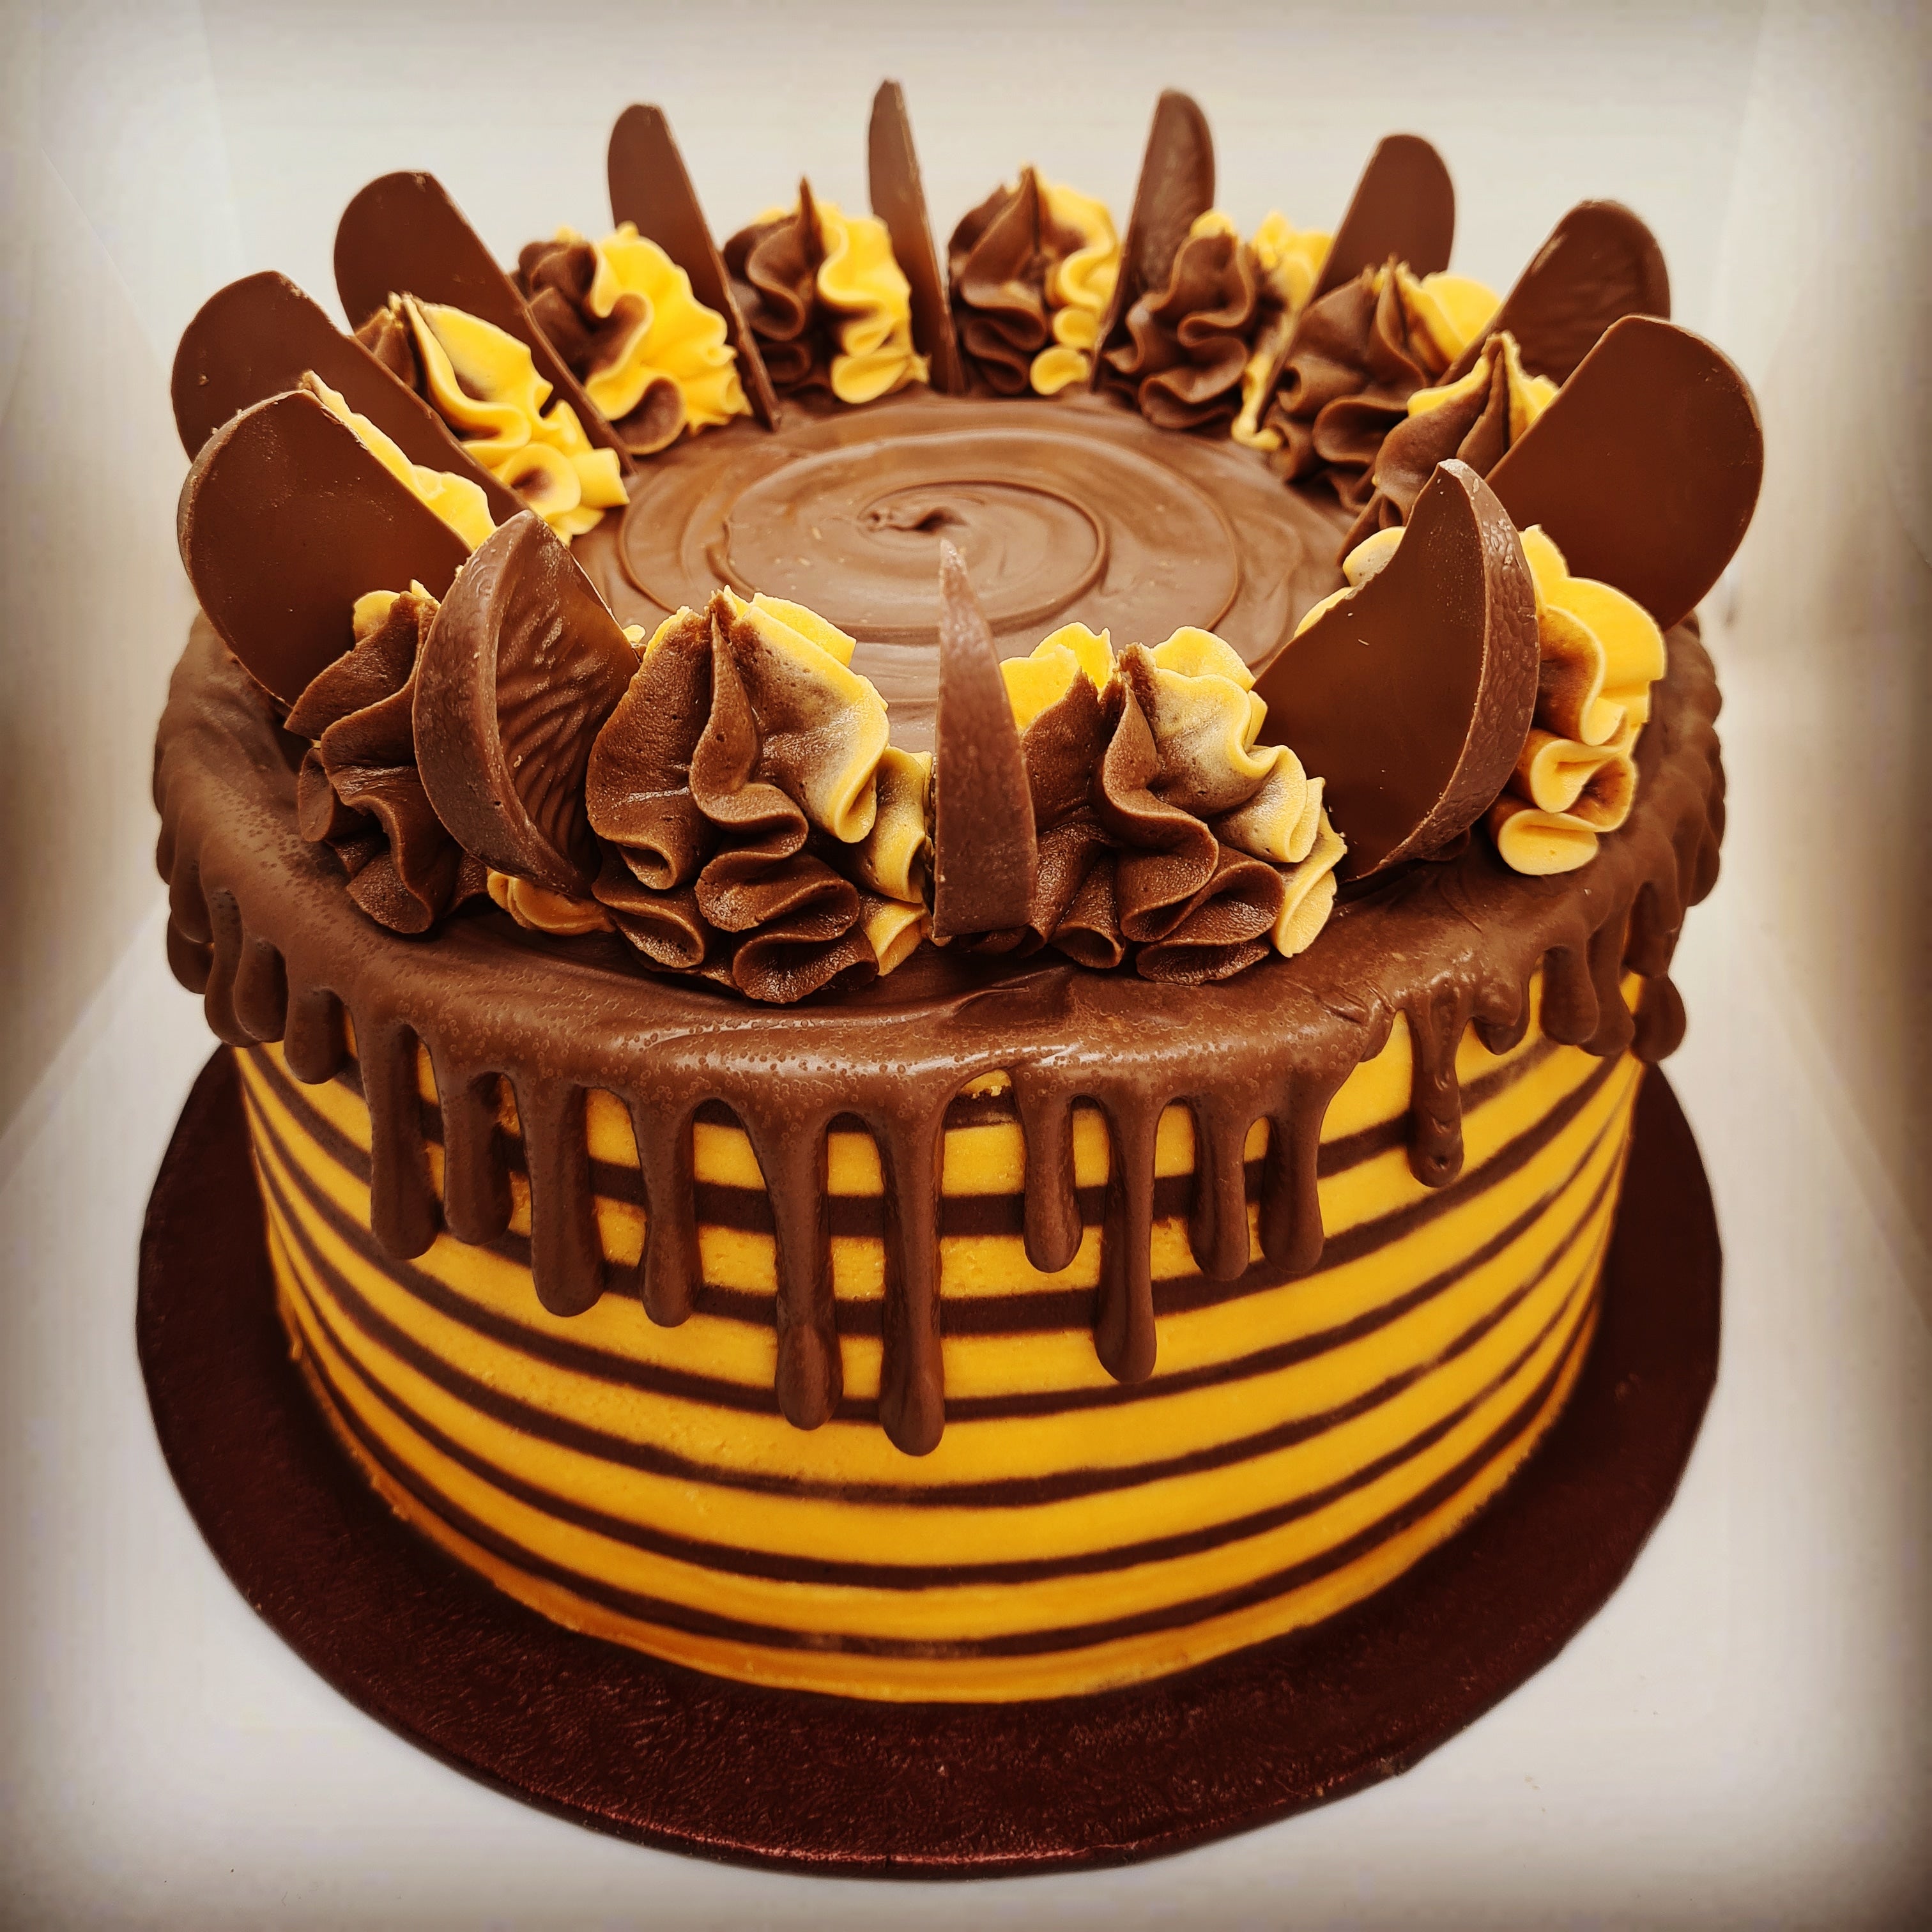 A chocolate orange cake with chocolate top and chocolate orange pieces